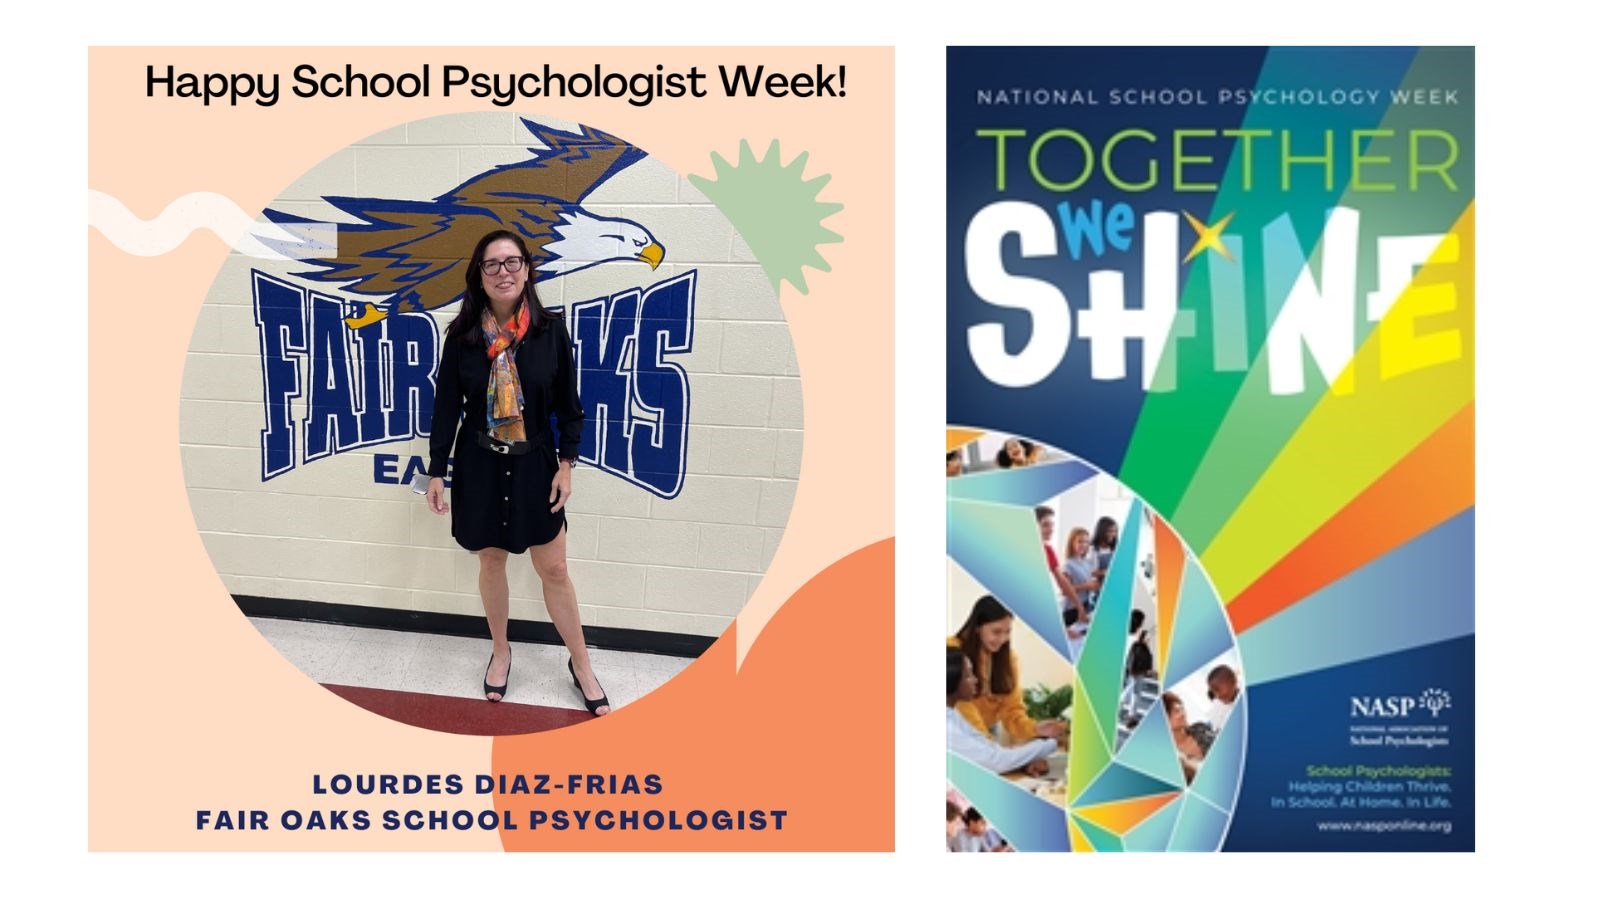 Happy School Psychologist Week, Ms. DiazFrias